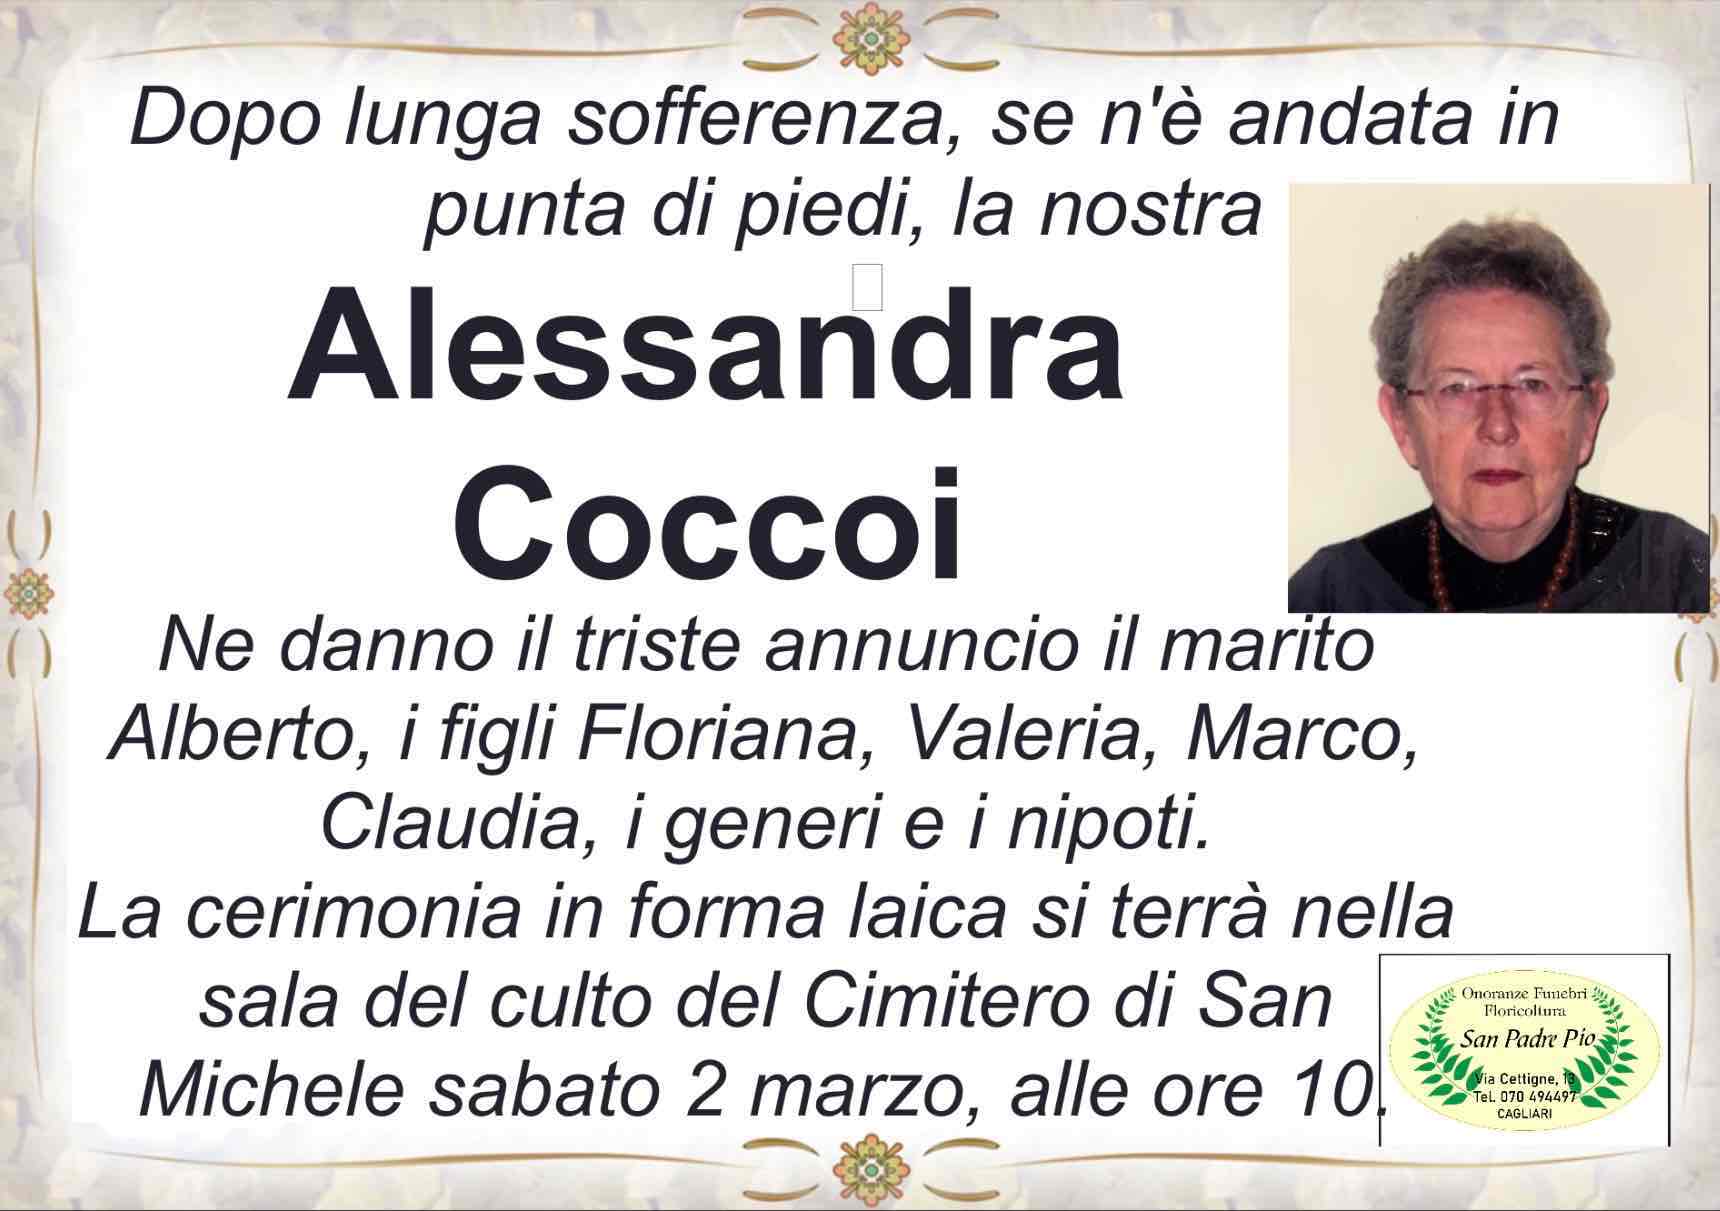 Alessandra Coccoi